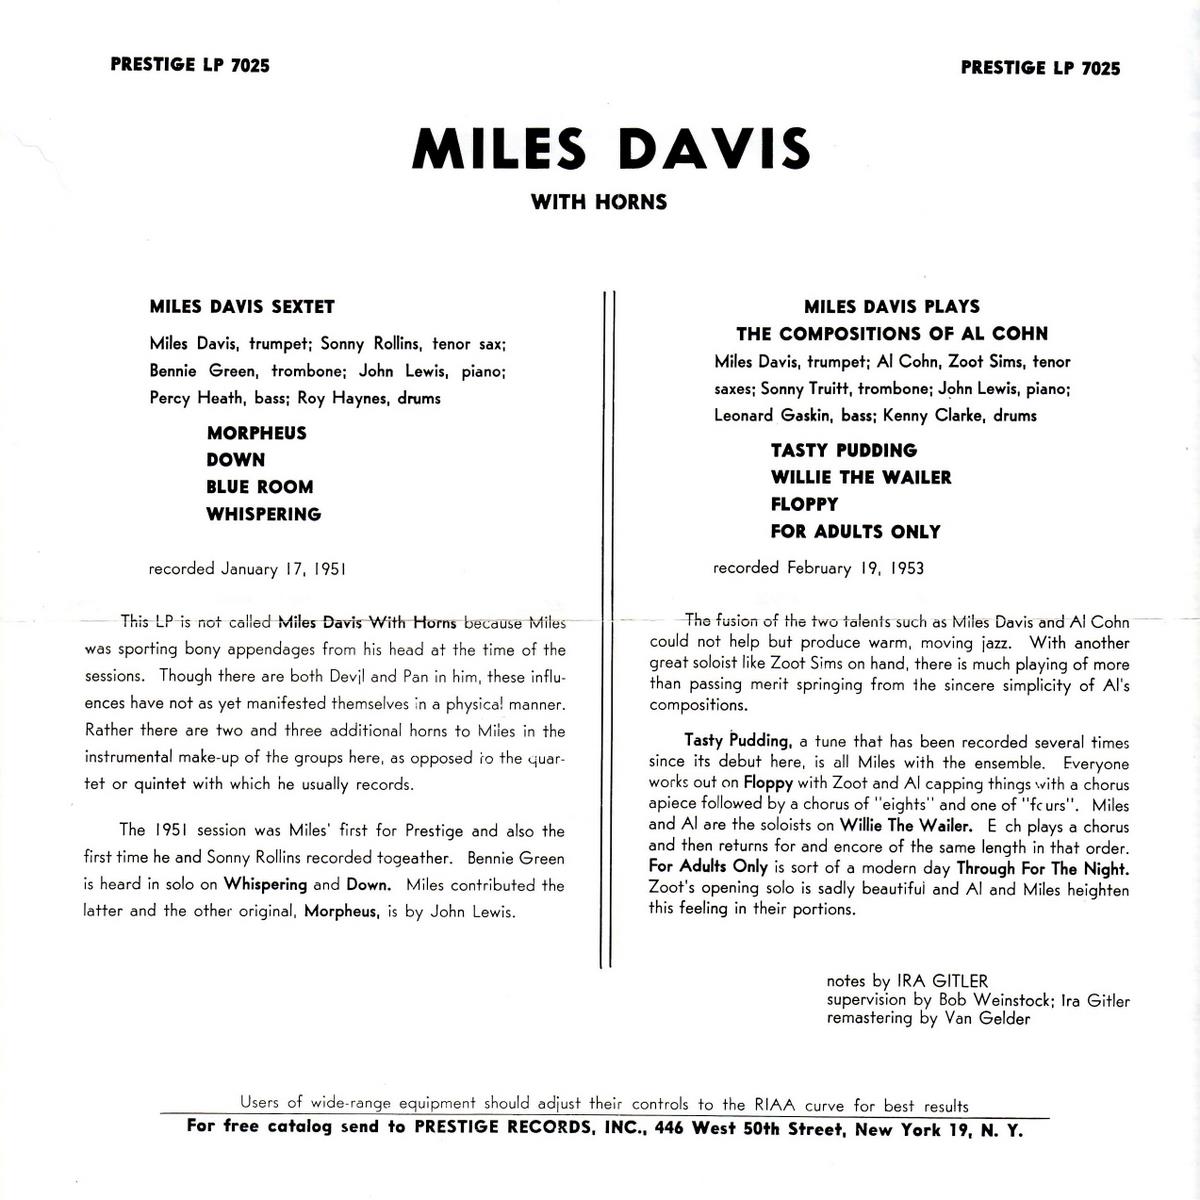 Miles Davis with Horns (PRLP 7025)